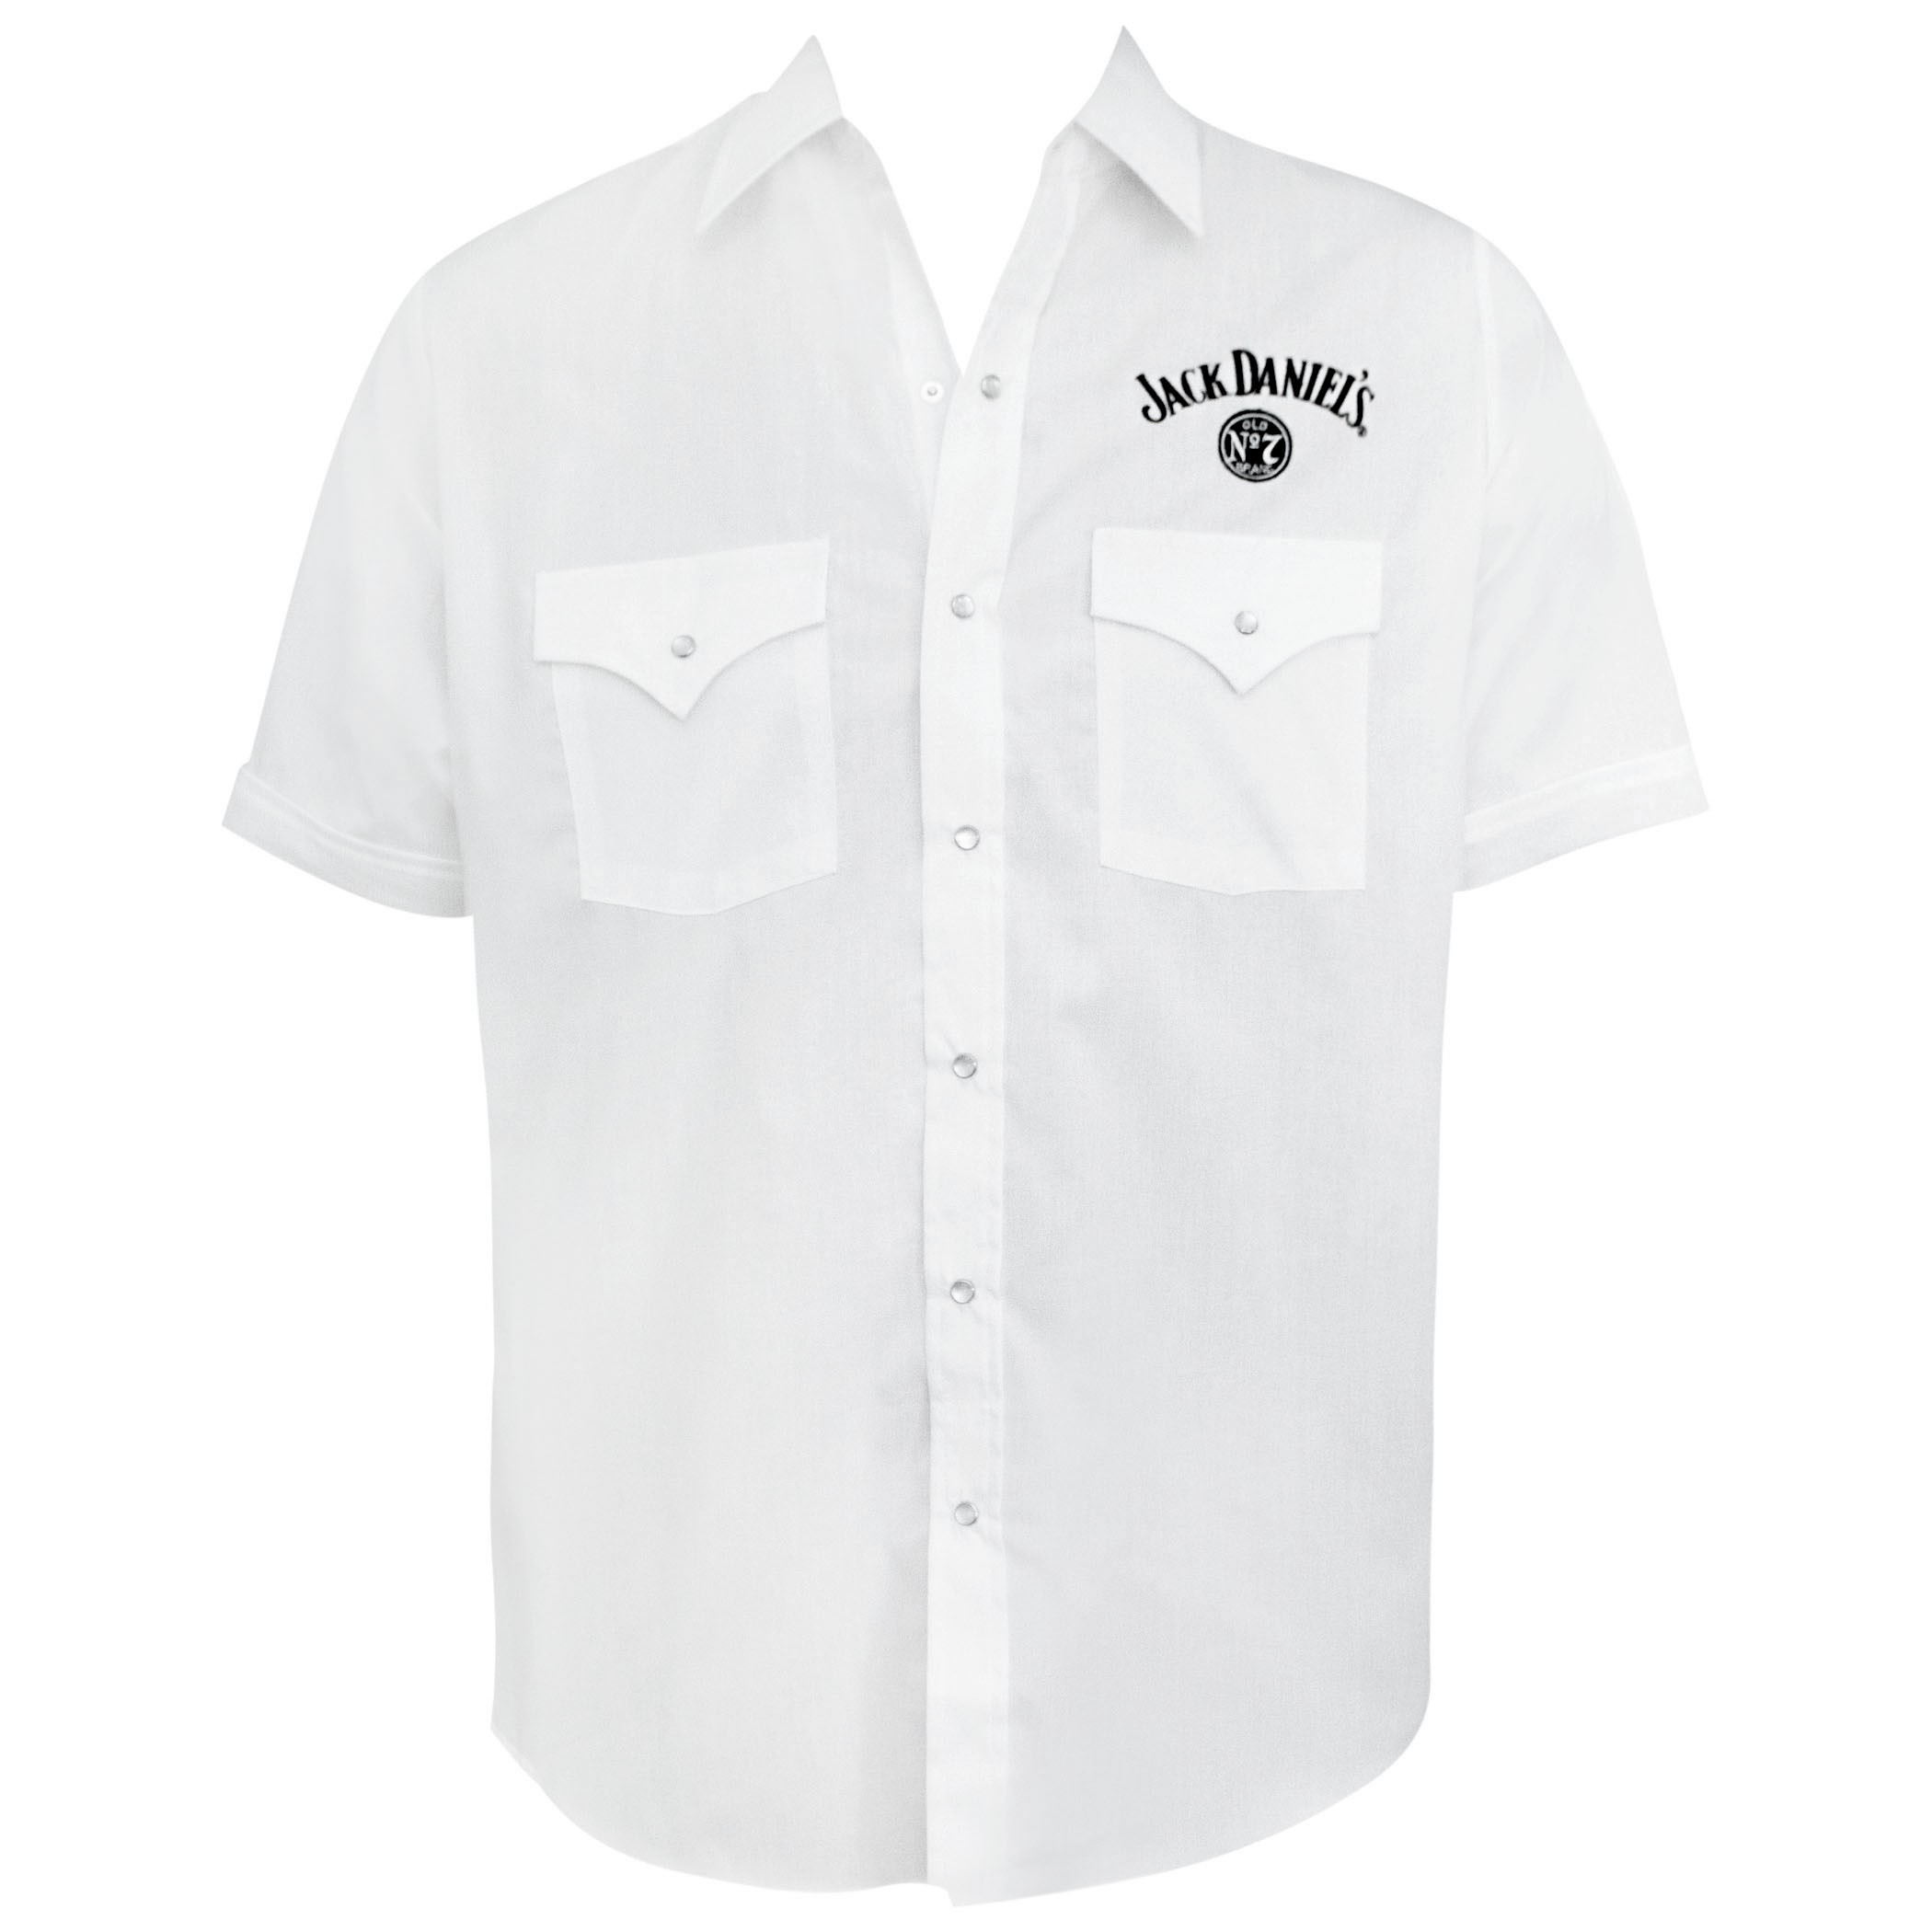 Jack Daniels White Short Sleeve Button Up